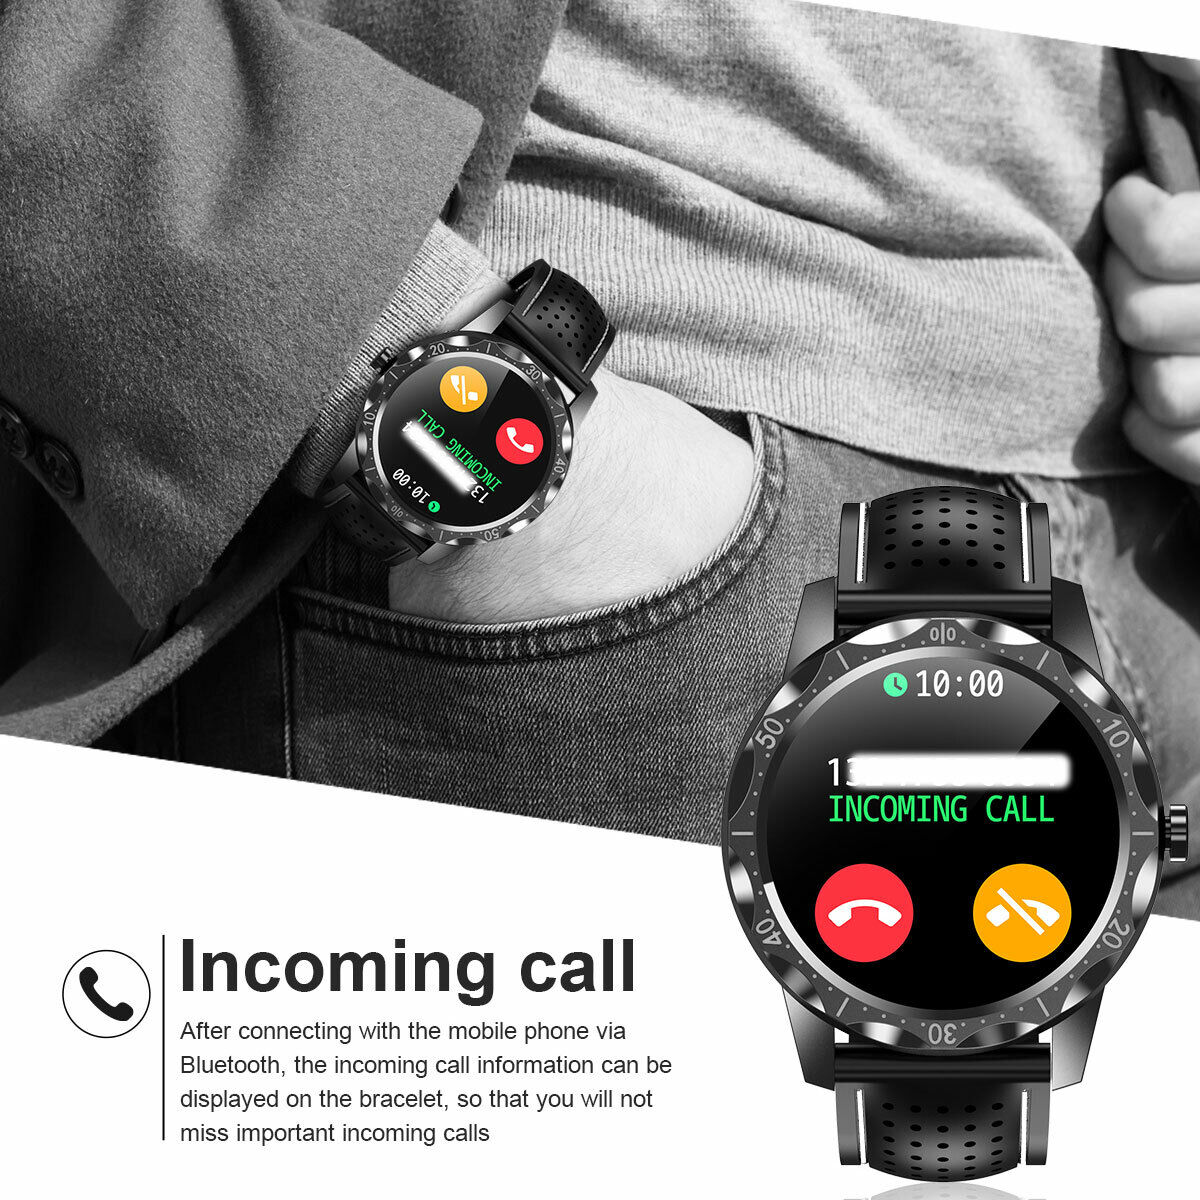 Digital Touchscreen Smartwatch Sport Pro - Jet Black